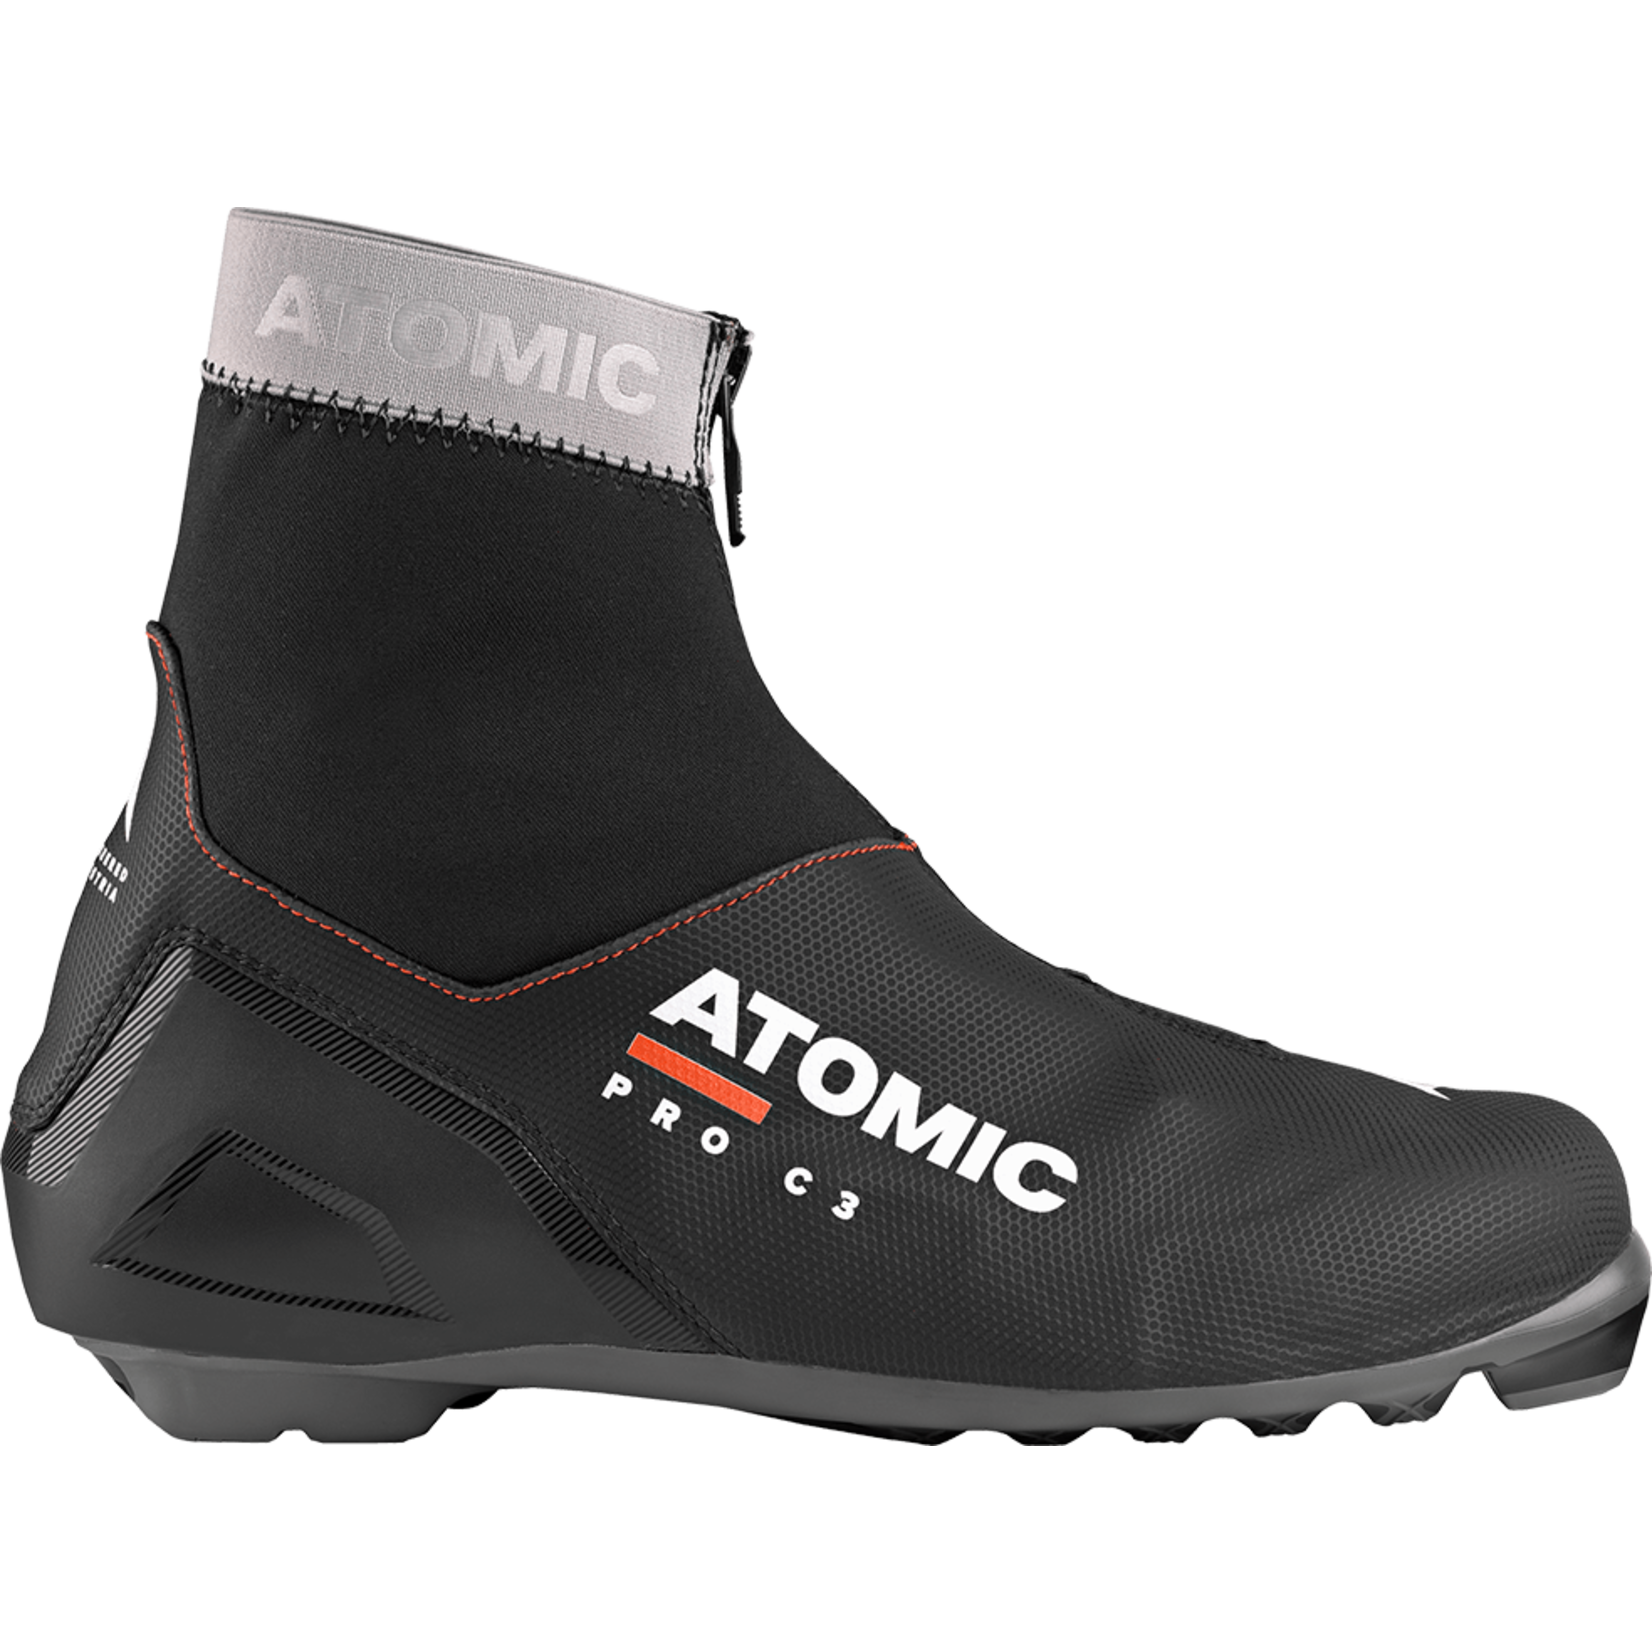 Atomic 22 Pro C3 Boot